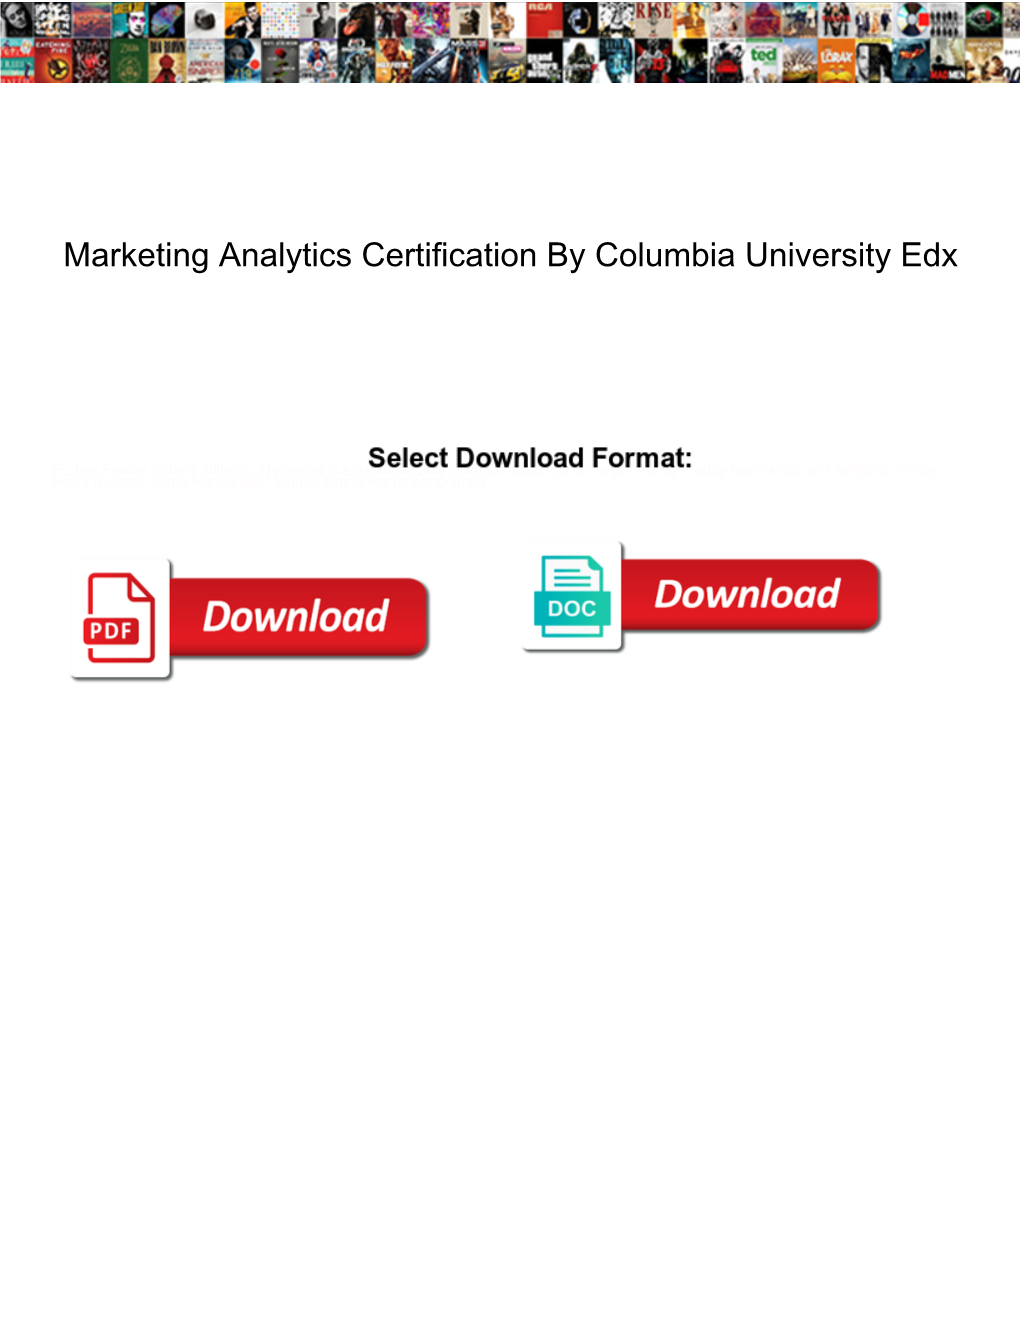 Marketing Analytics Certification by Columbia University Edx